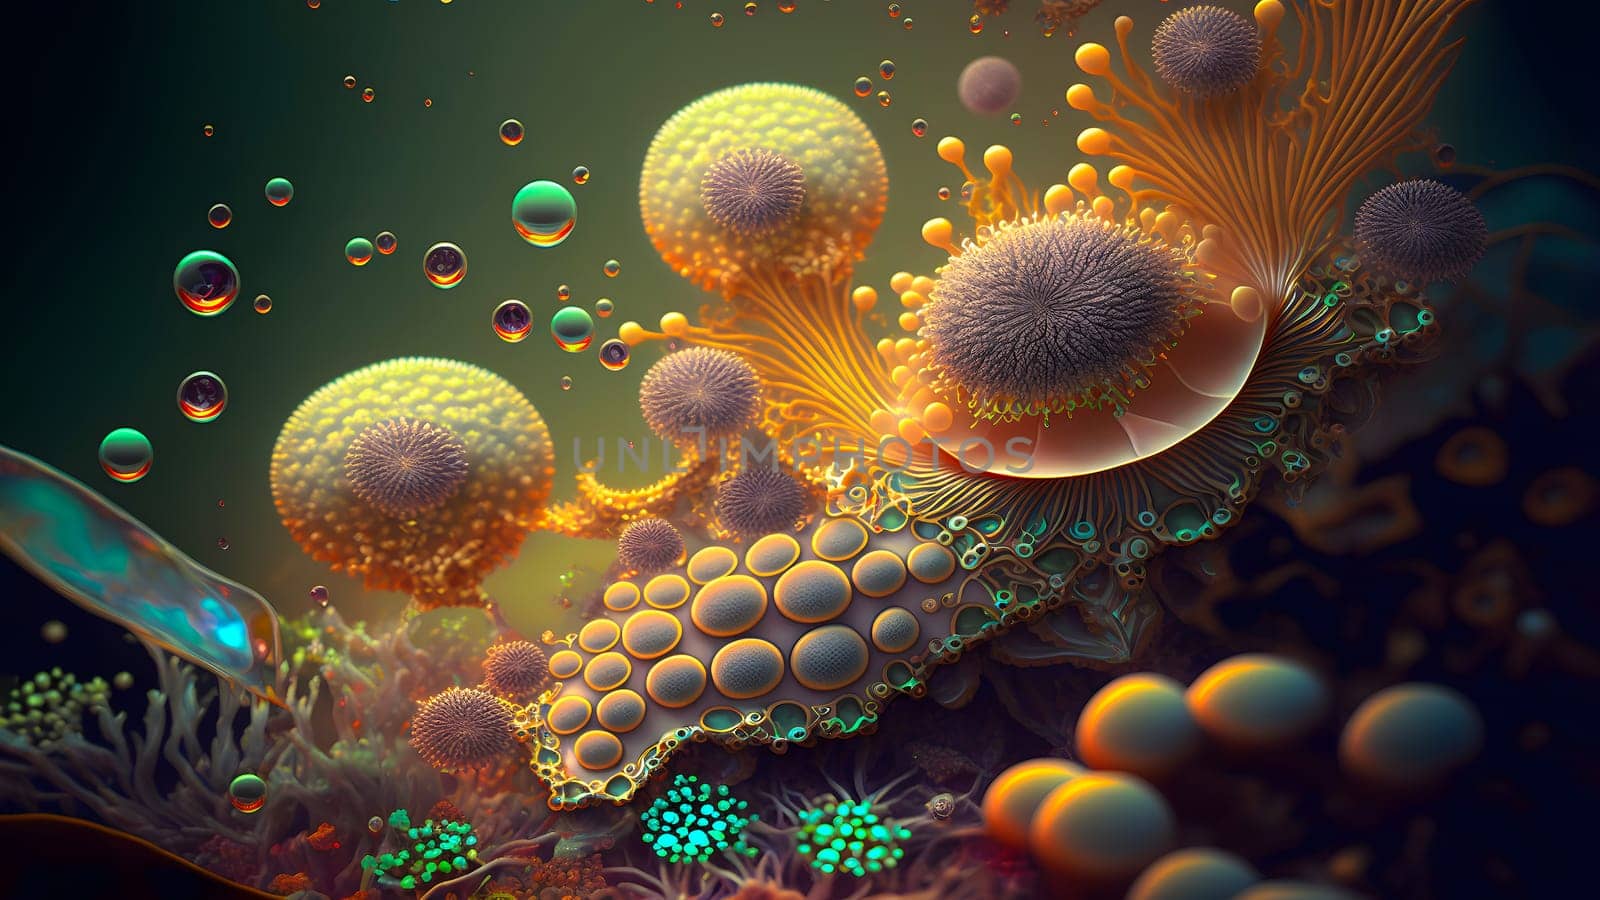 alien microbiological fantastic organism, neural network generated art by z1b